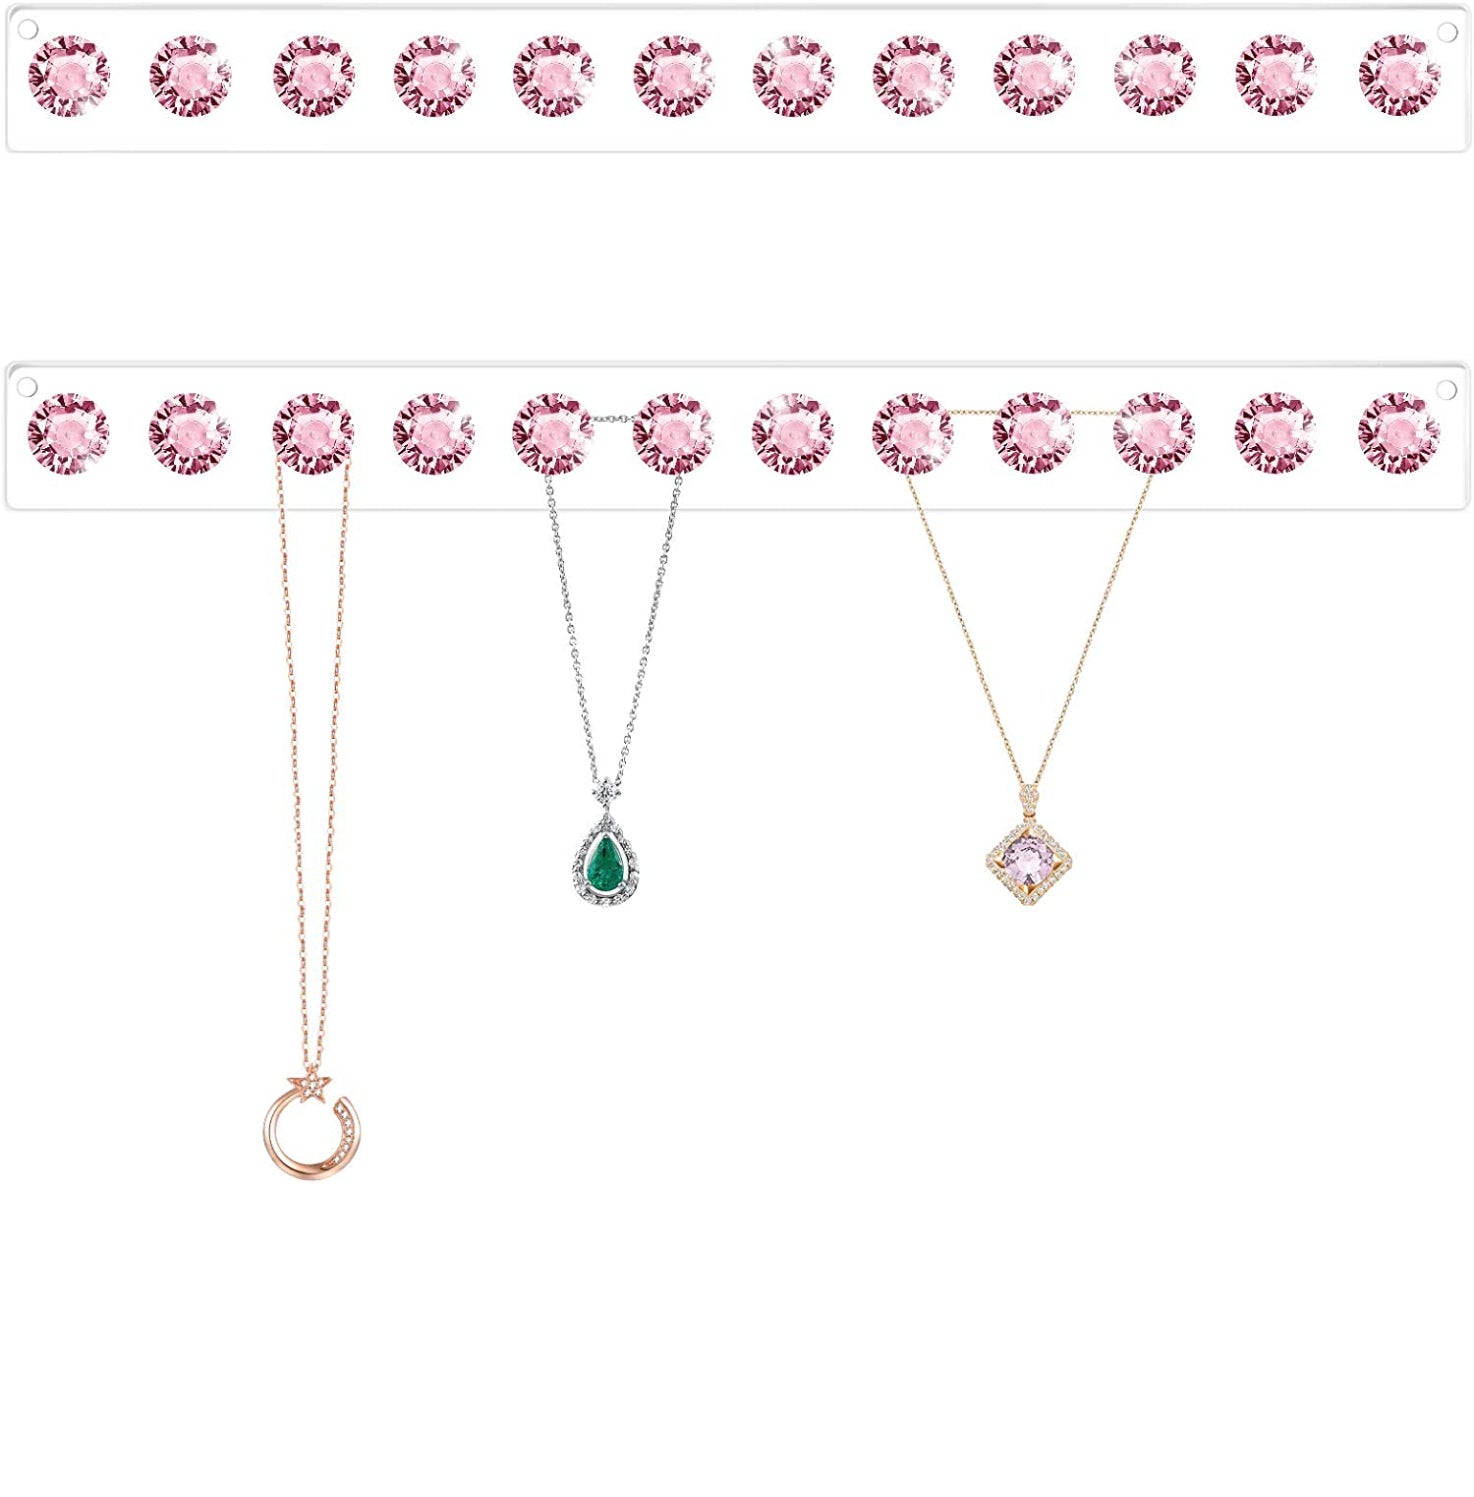 Necklace Holder Hanger Diamond Hooks (Pink)